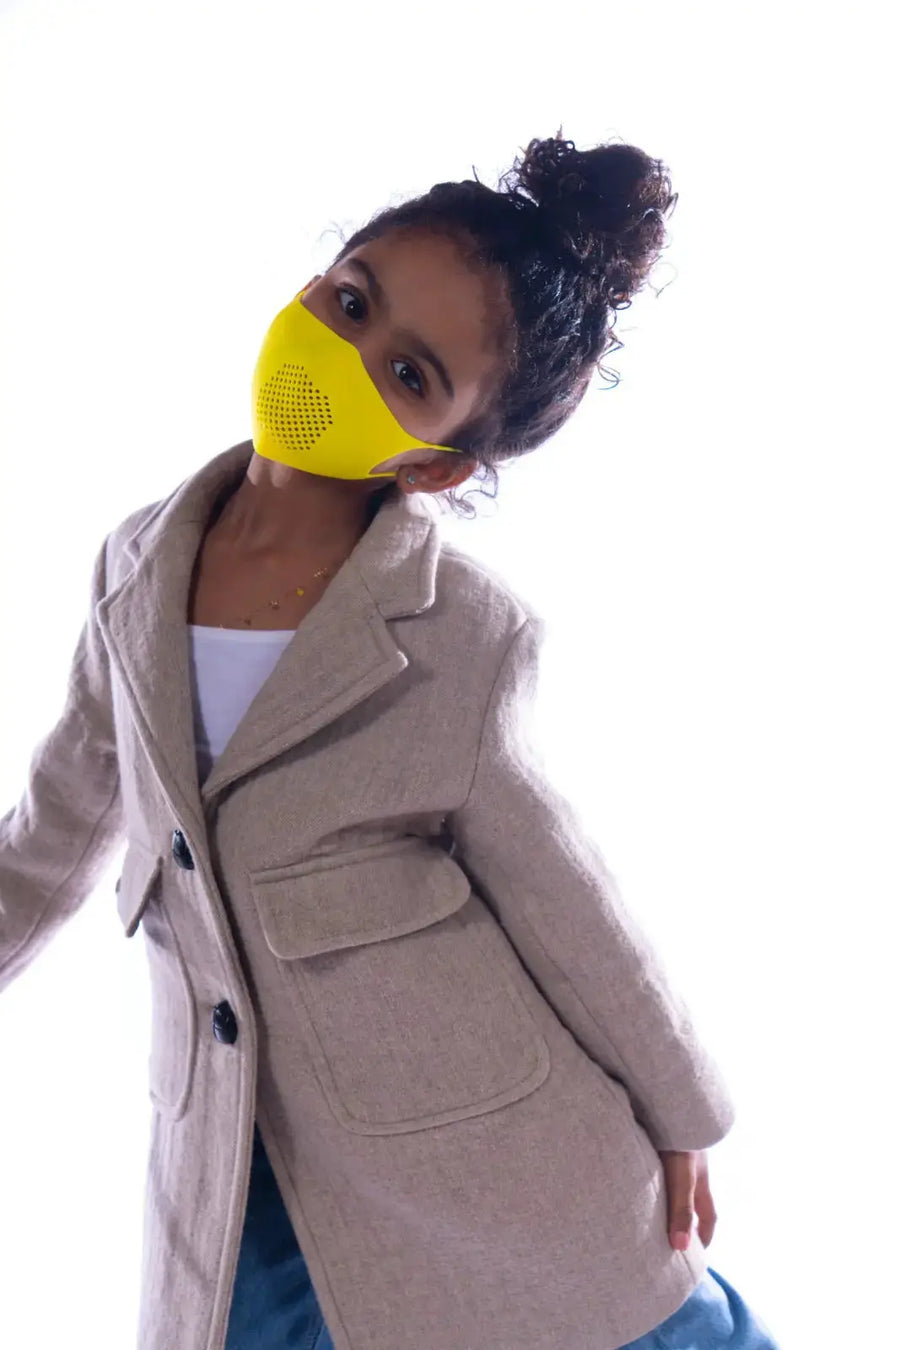 Kids Reusable Face Mask Kit - Pineapple Blast Protect